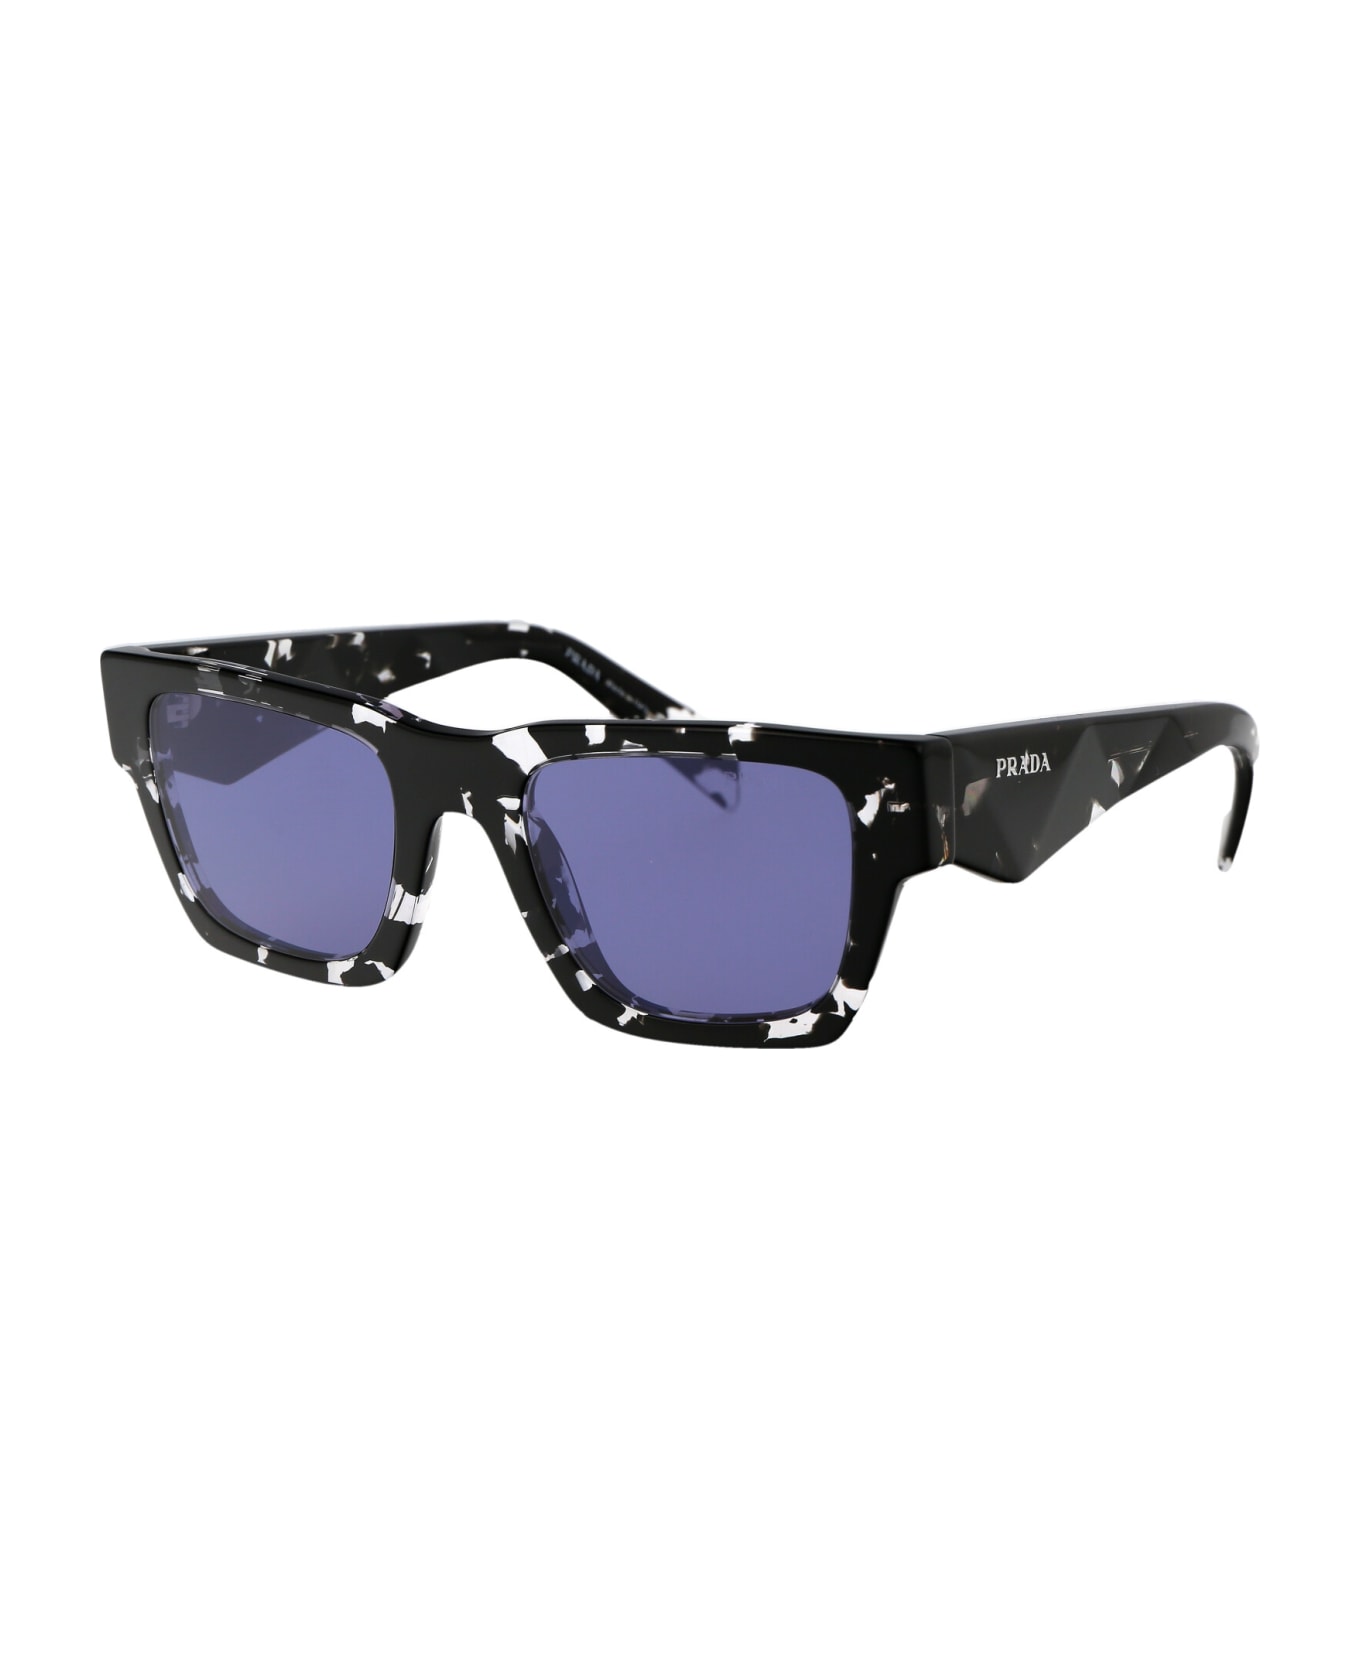 Prada Eyewear 0pr A06s Sunglasses - 15O50B Tortoise Black Crystal サングラス